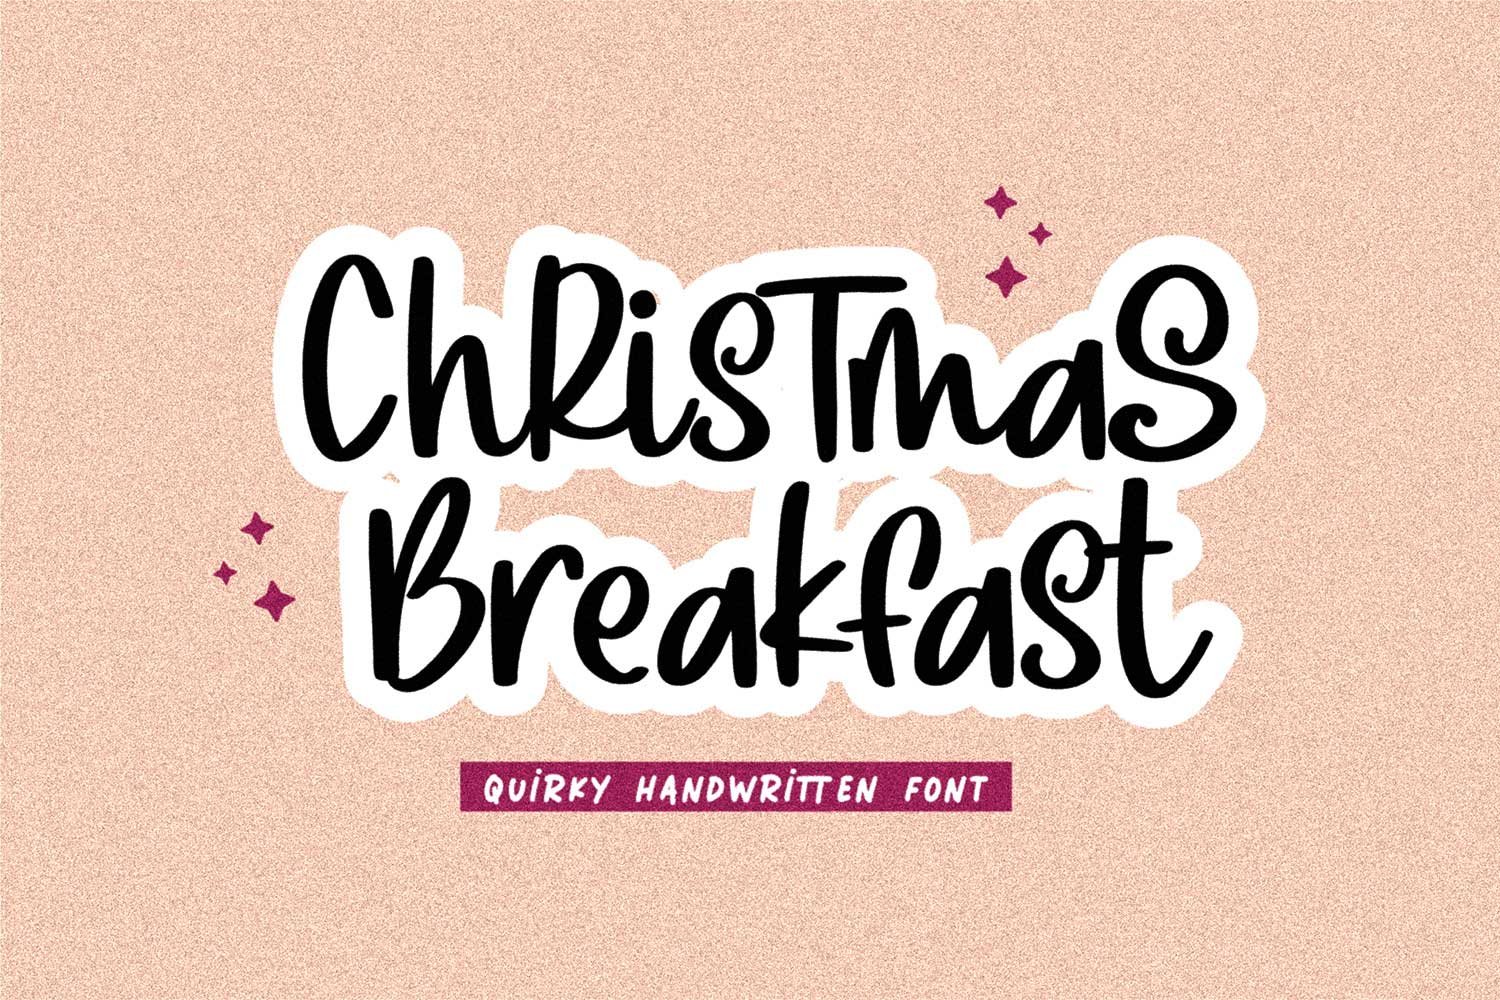 Christmas Breakfast cover image.